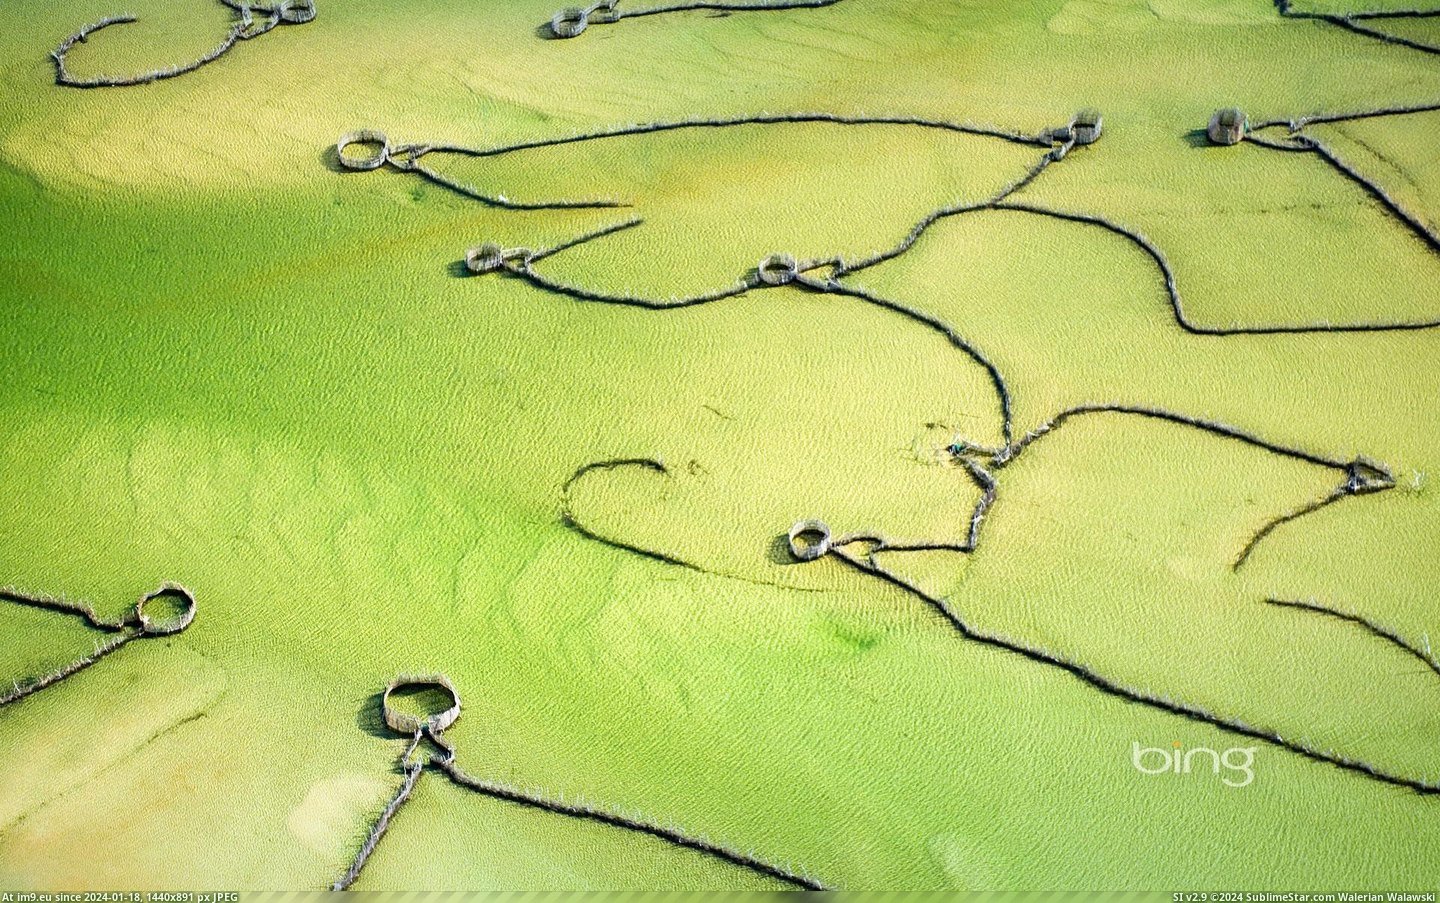 Fish traps in Kosi Bay, South Africa (in Bing Photos November 2012)